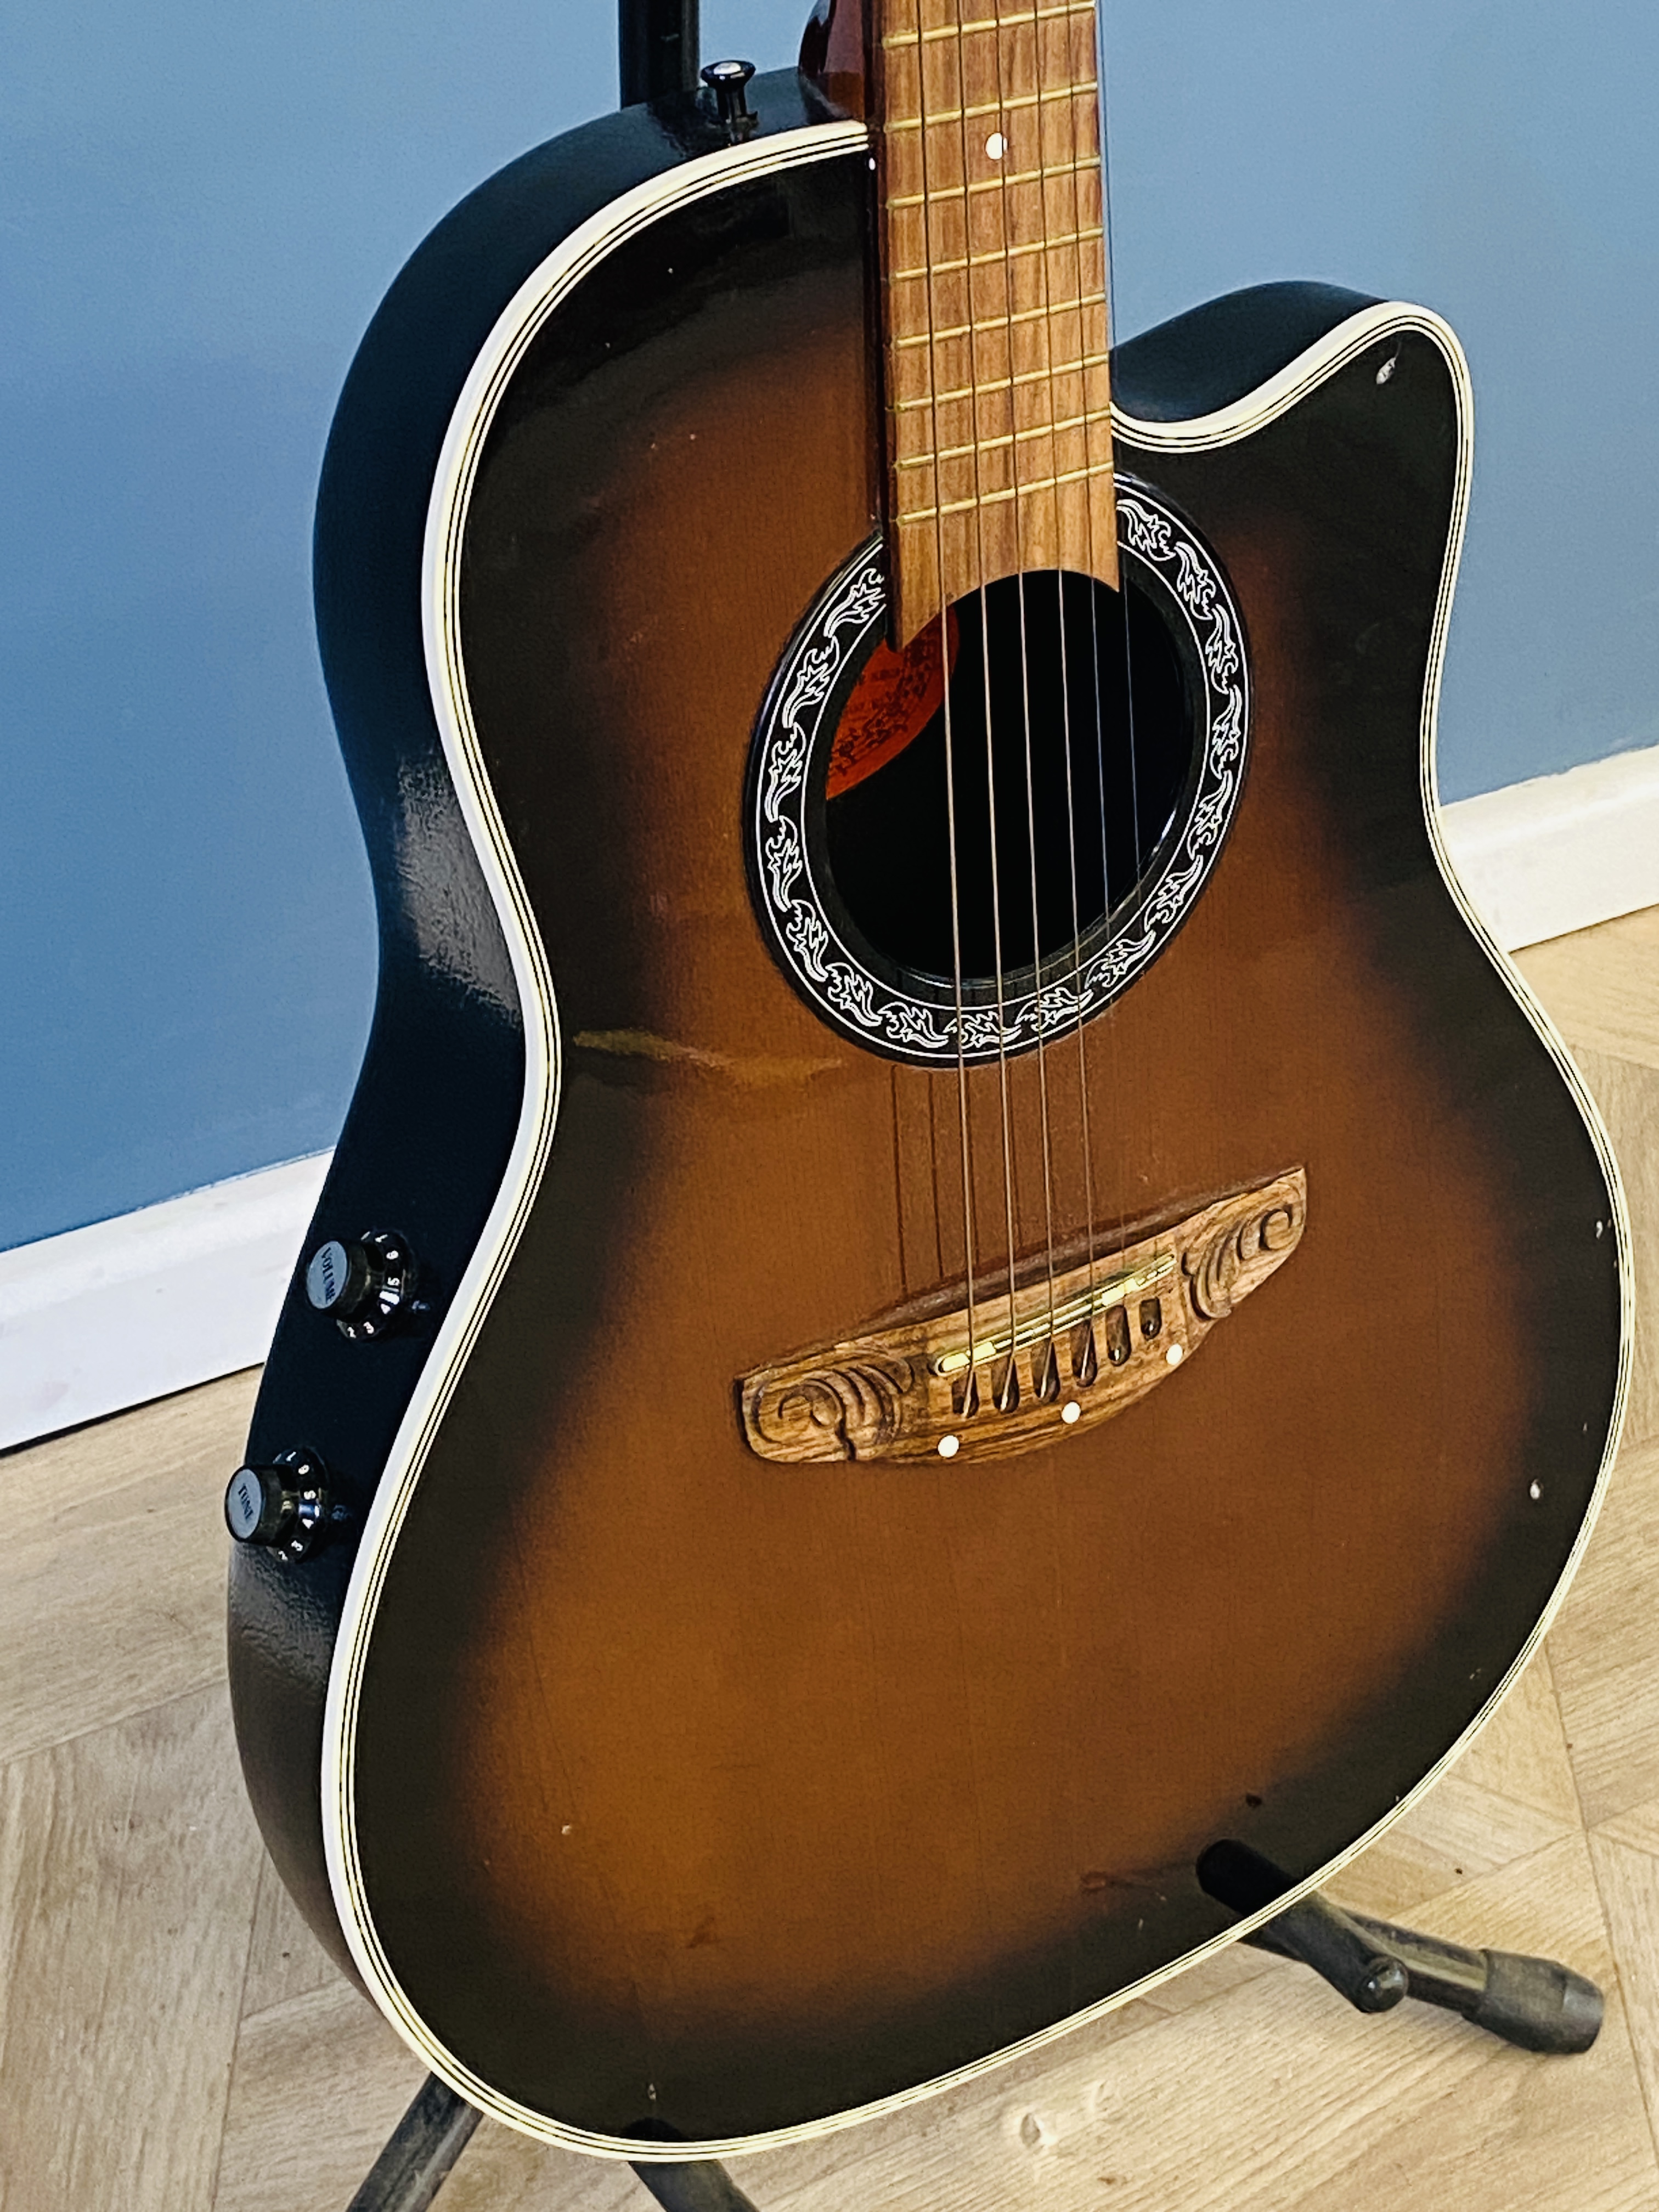 Clarissa G300 electro acoustic roundback guitar. - Image 3 of 4